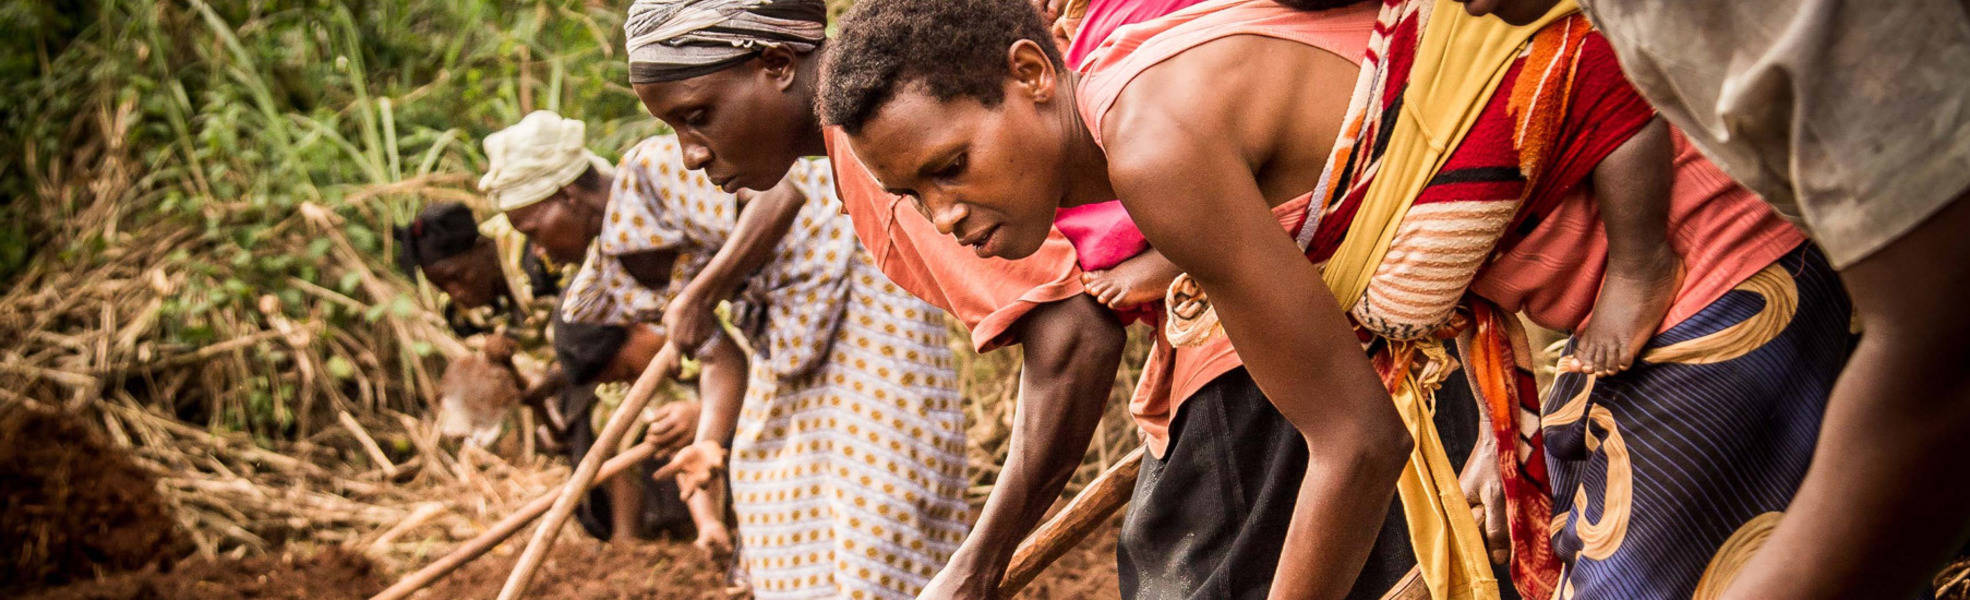 Farmarbeit in Uganda